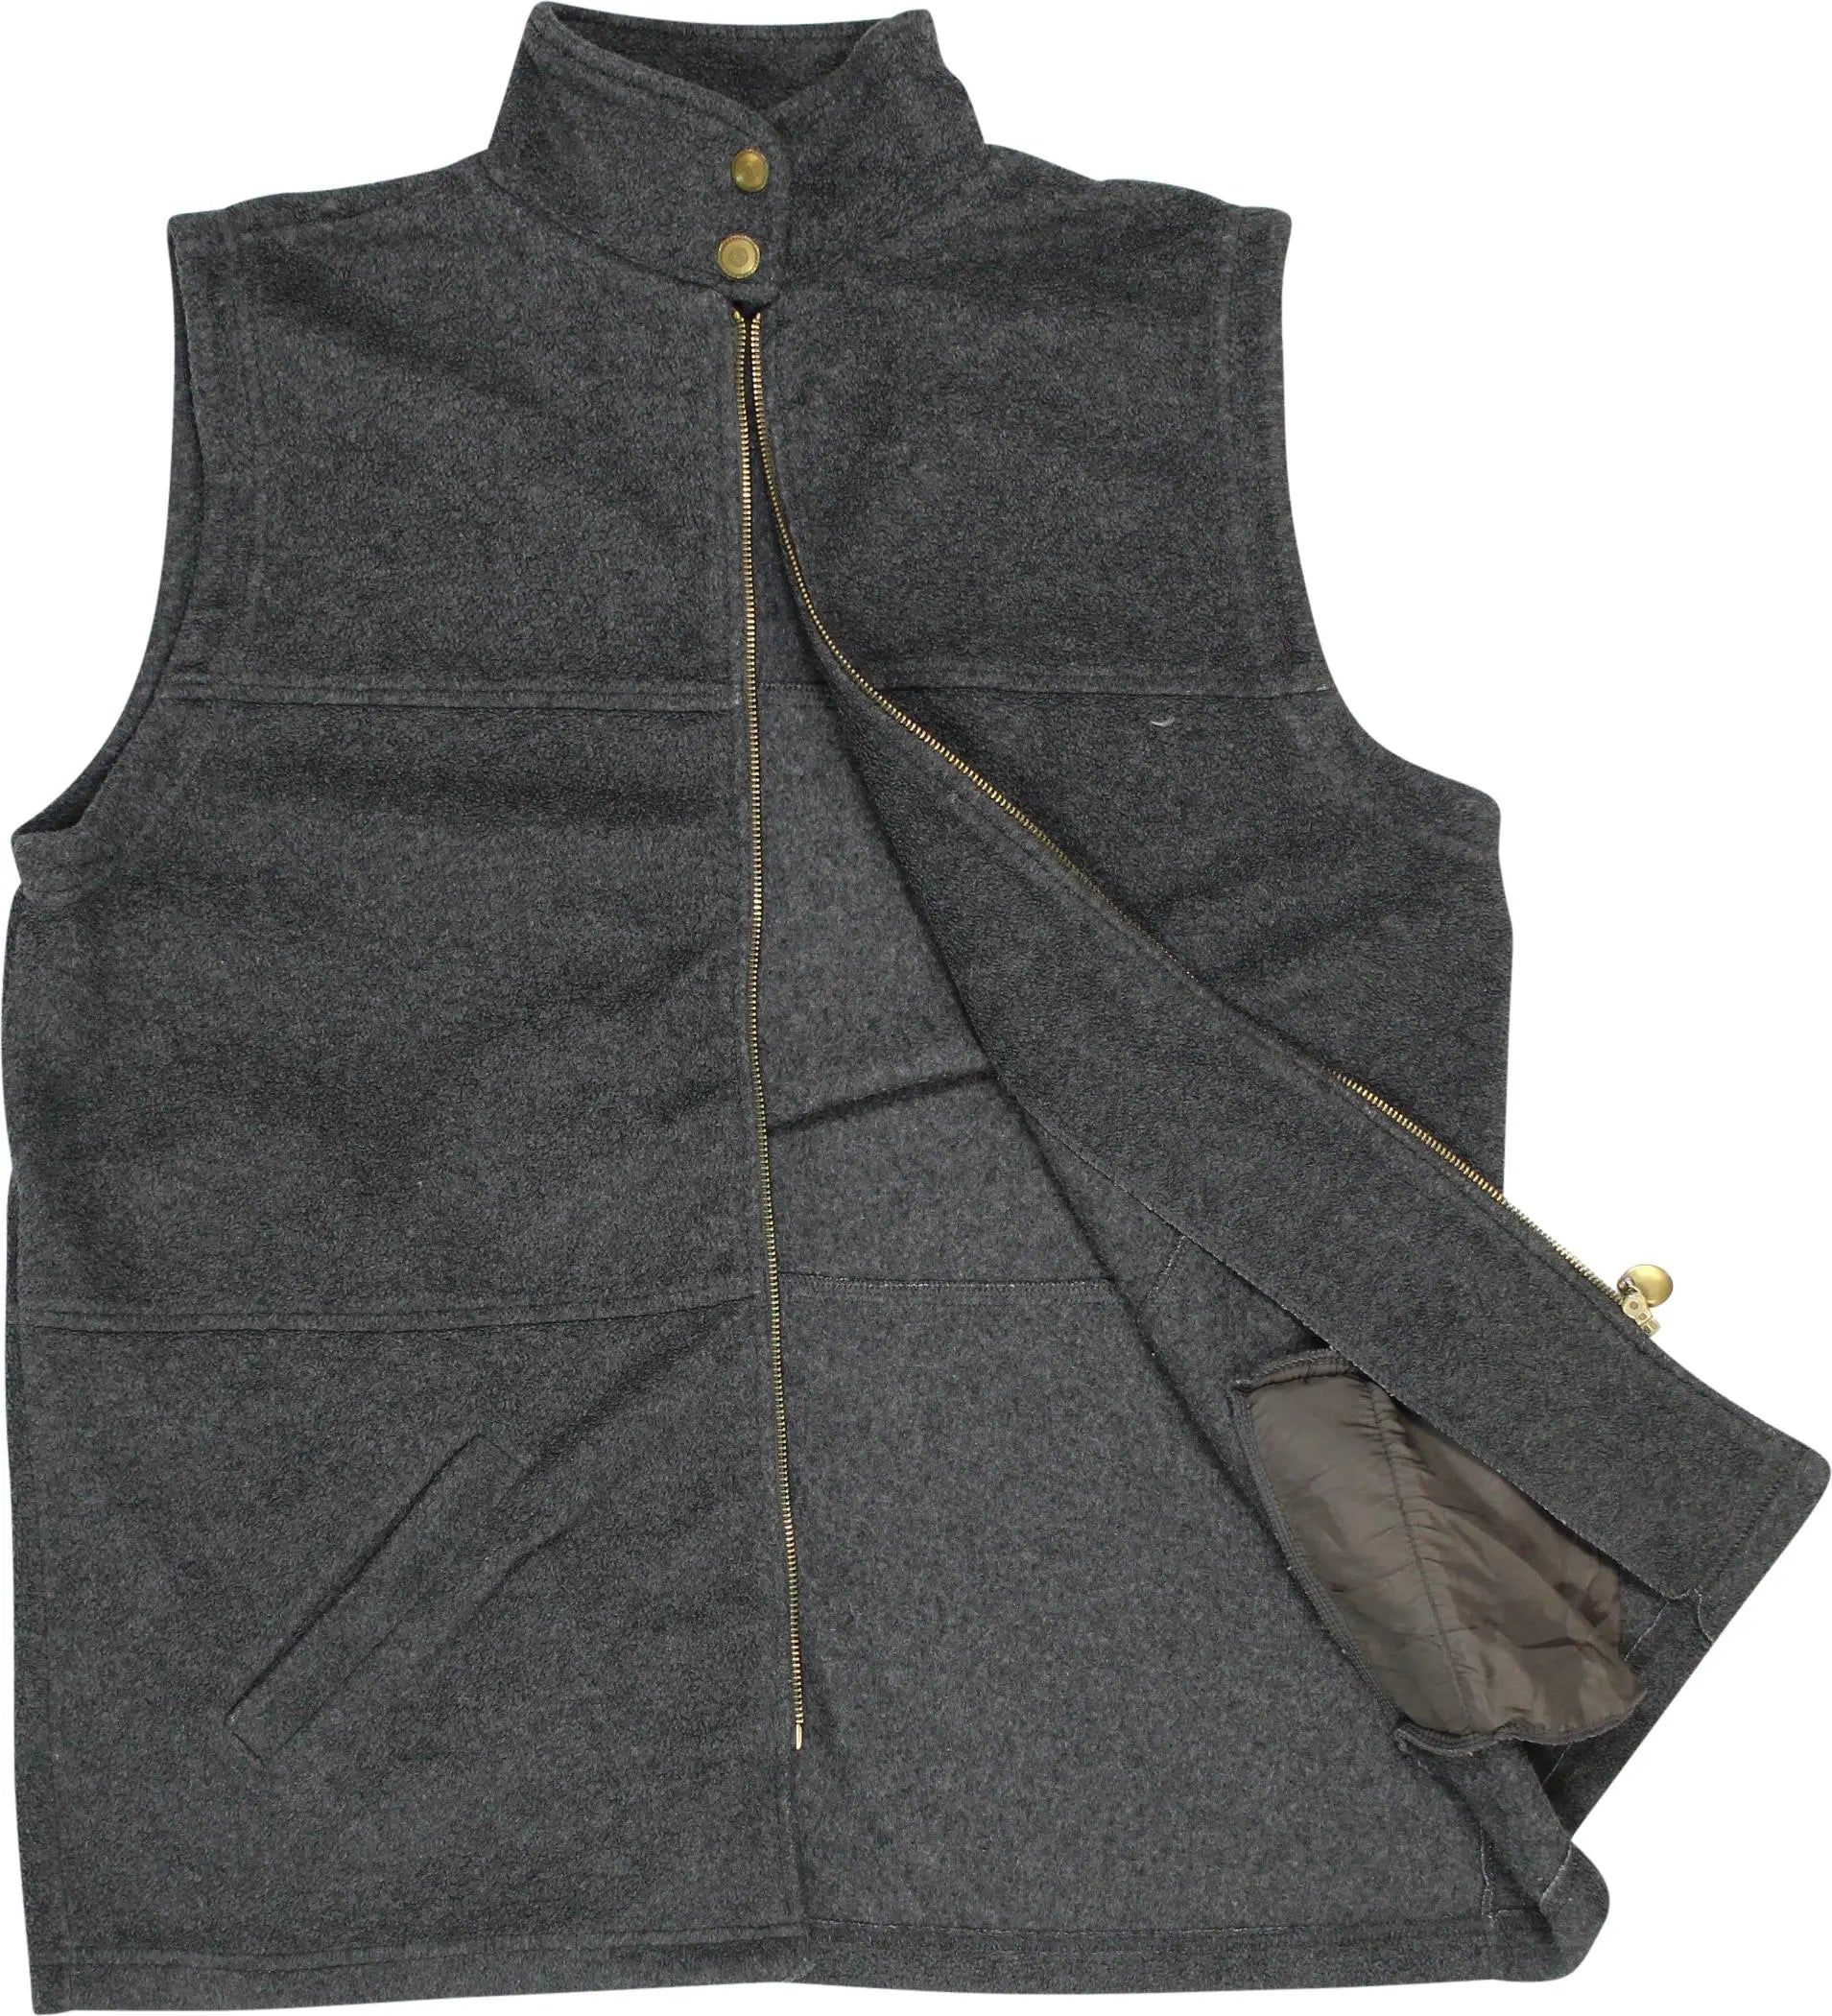 Newport - Fleece Bodywarmer- ThriftTale.com - Vintage and second handclothing